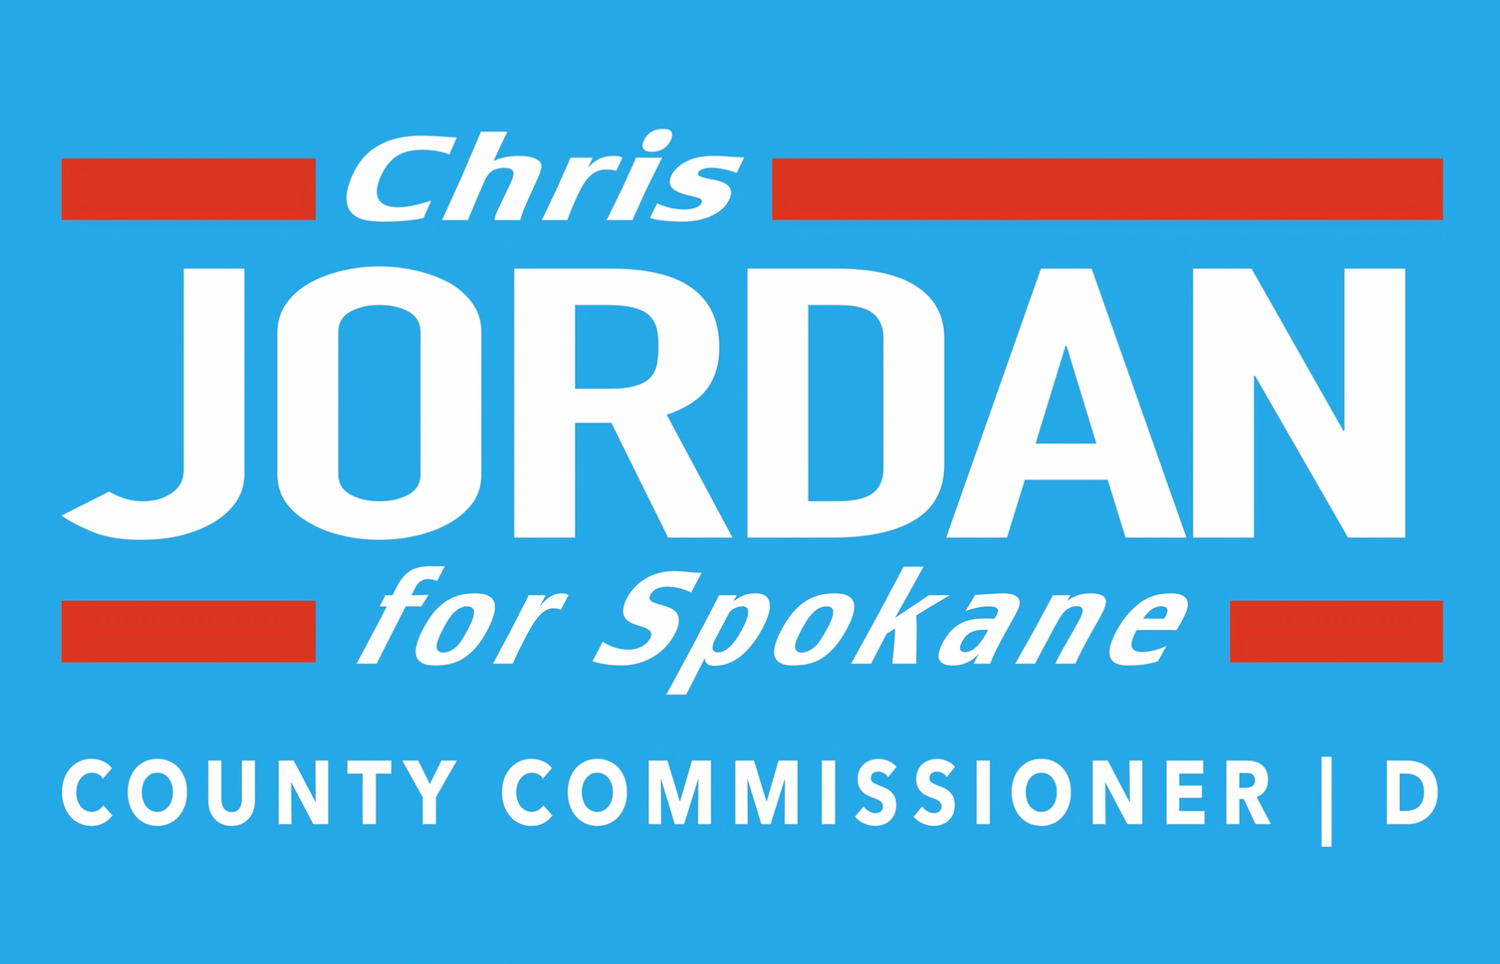 Chris Jordan For Spokane County Commissioner, District 1